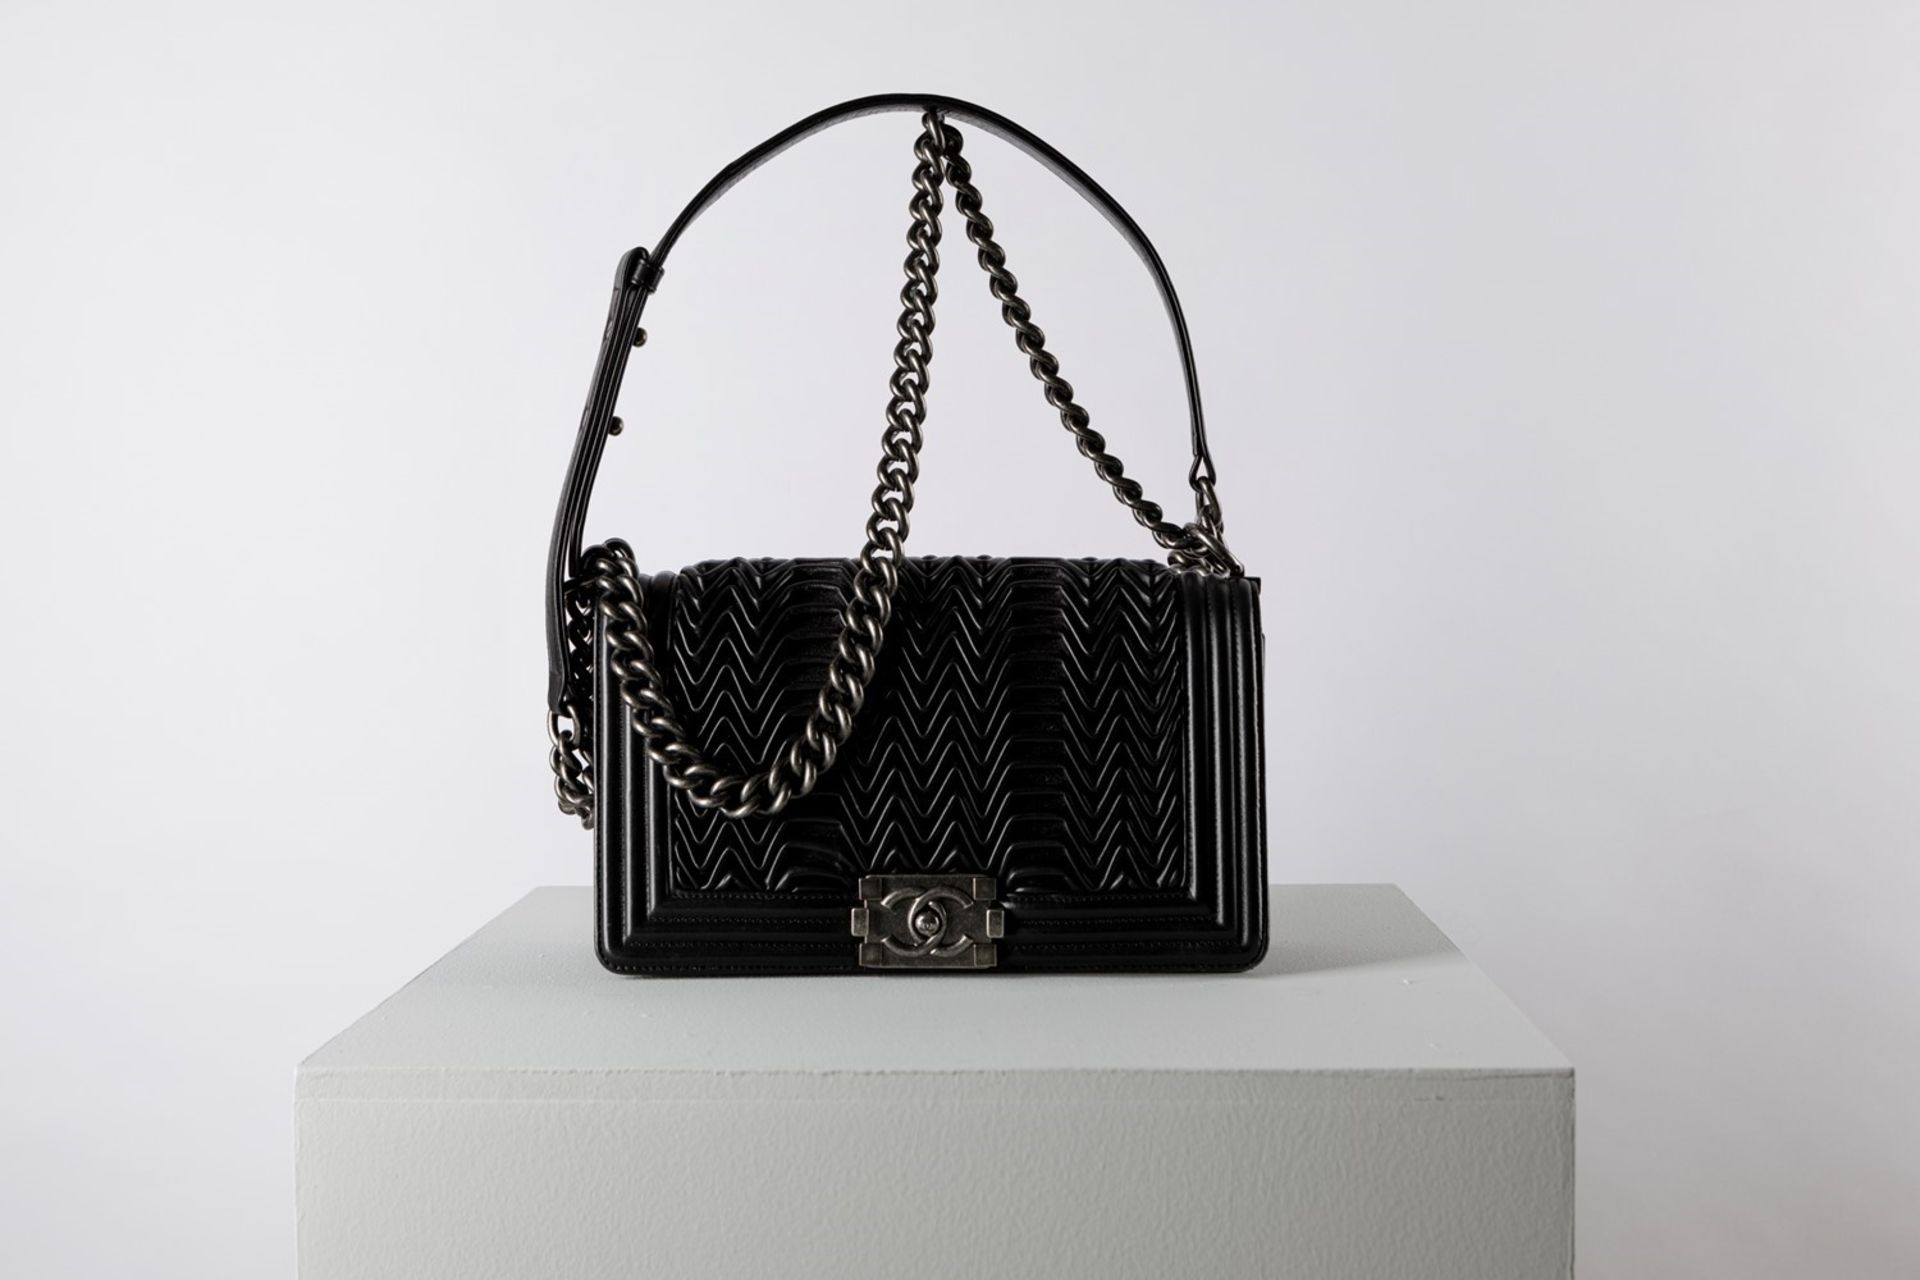 Chanel - Boy bag 25 cm - Boy bag 25 cm - Black leather Boy bag, burnished metal [...]